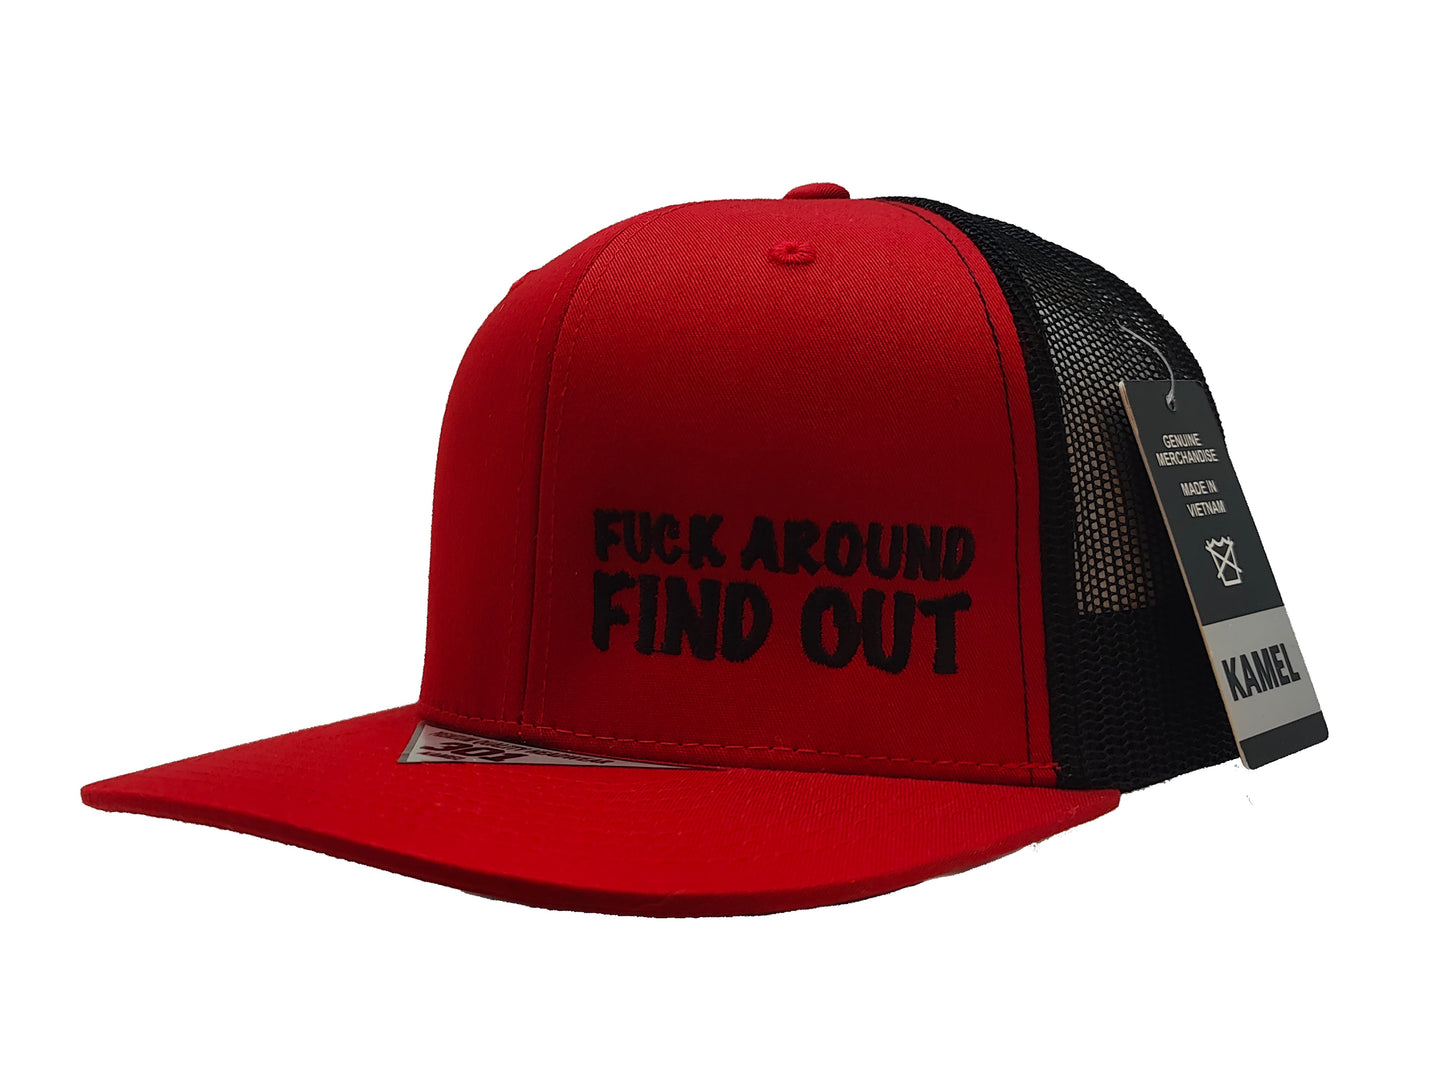 FUCK AROUND FIND OUT Kamel Adult Flat Bill Hat 301 Red / Black